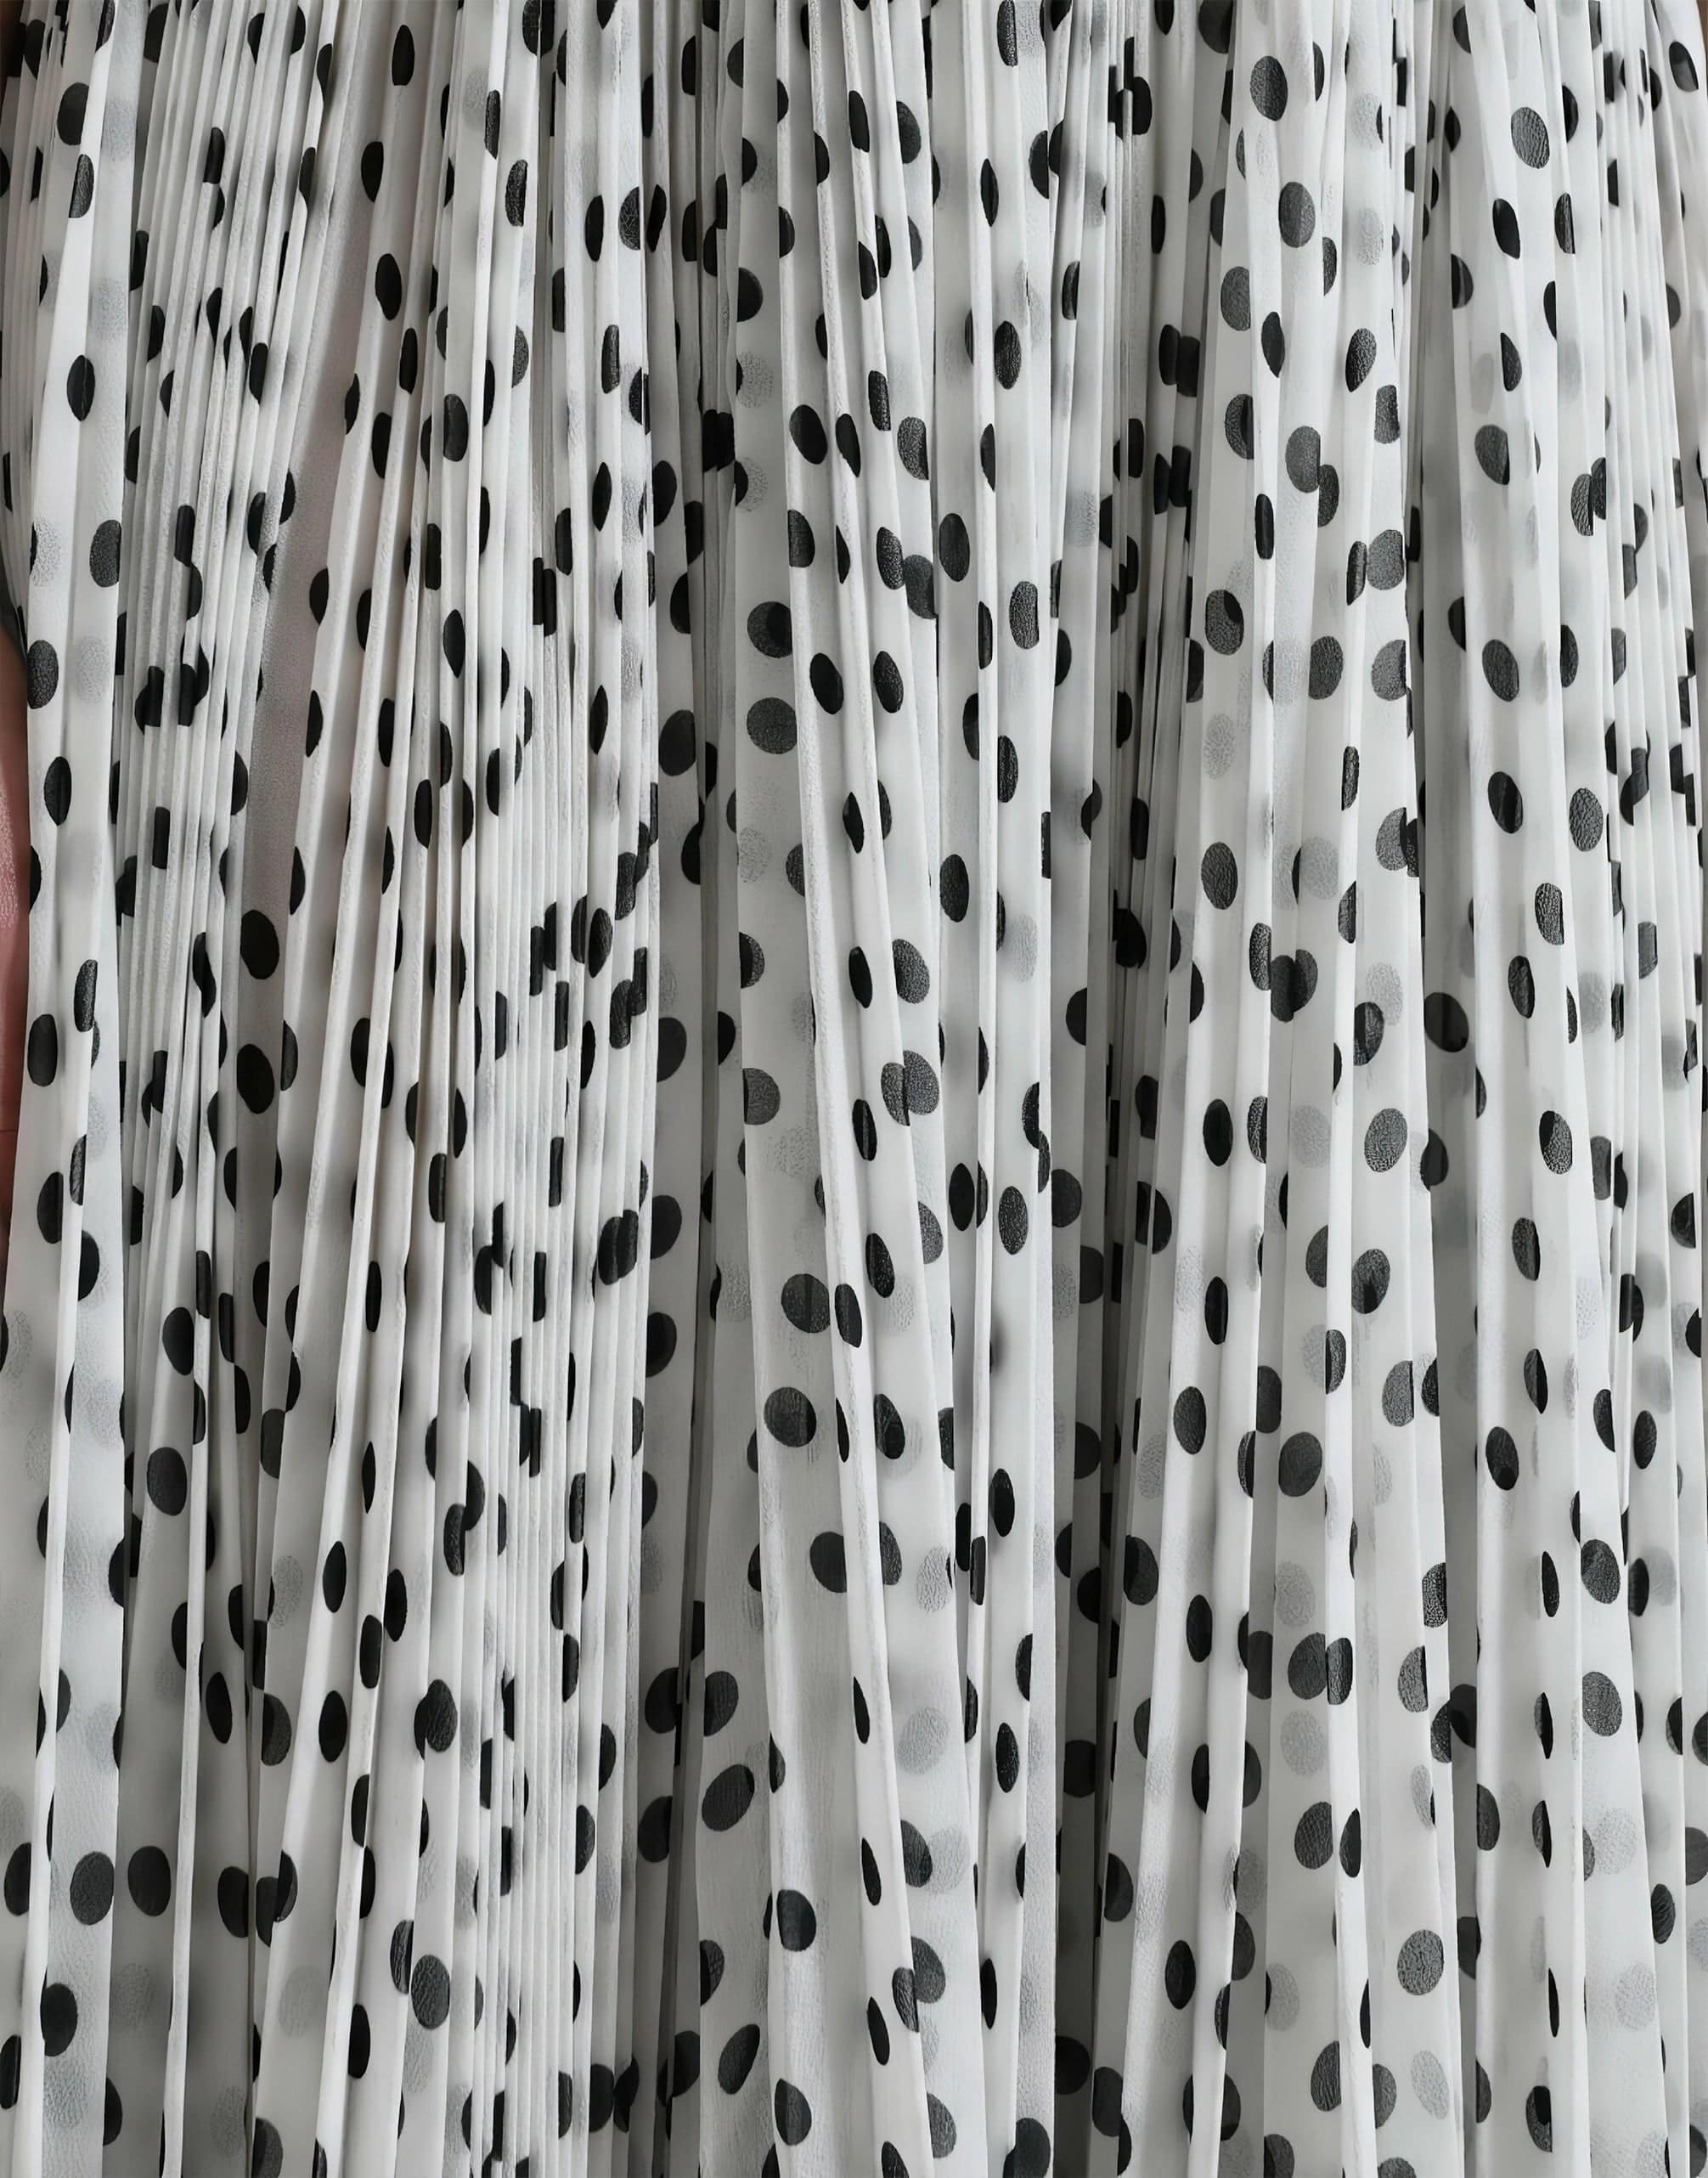 Polka Dot Pleated Maxi Dress